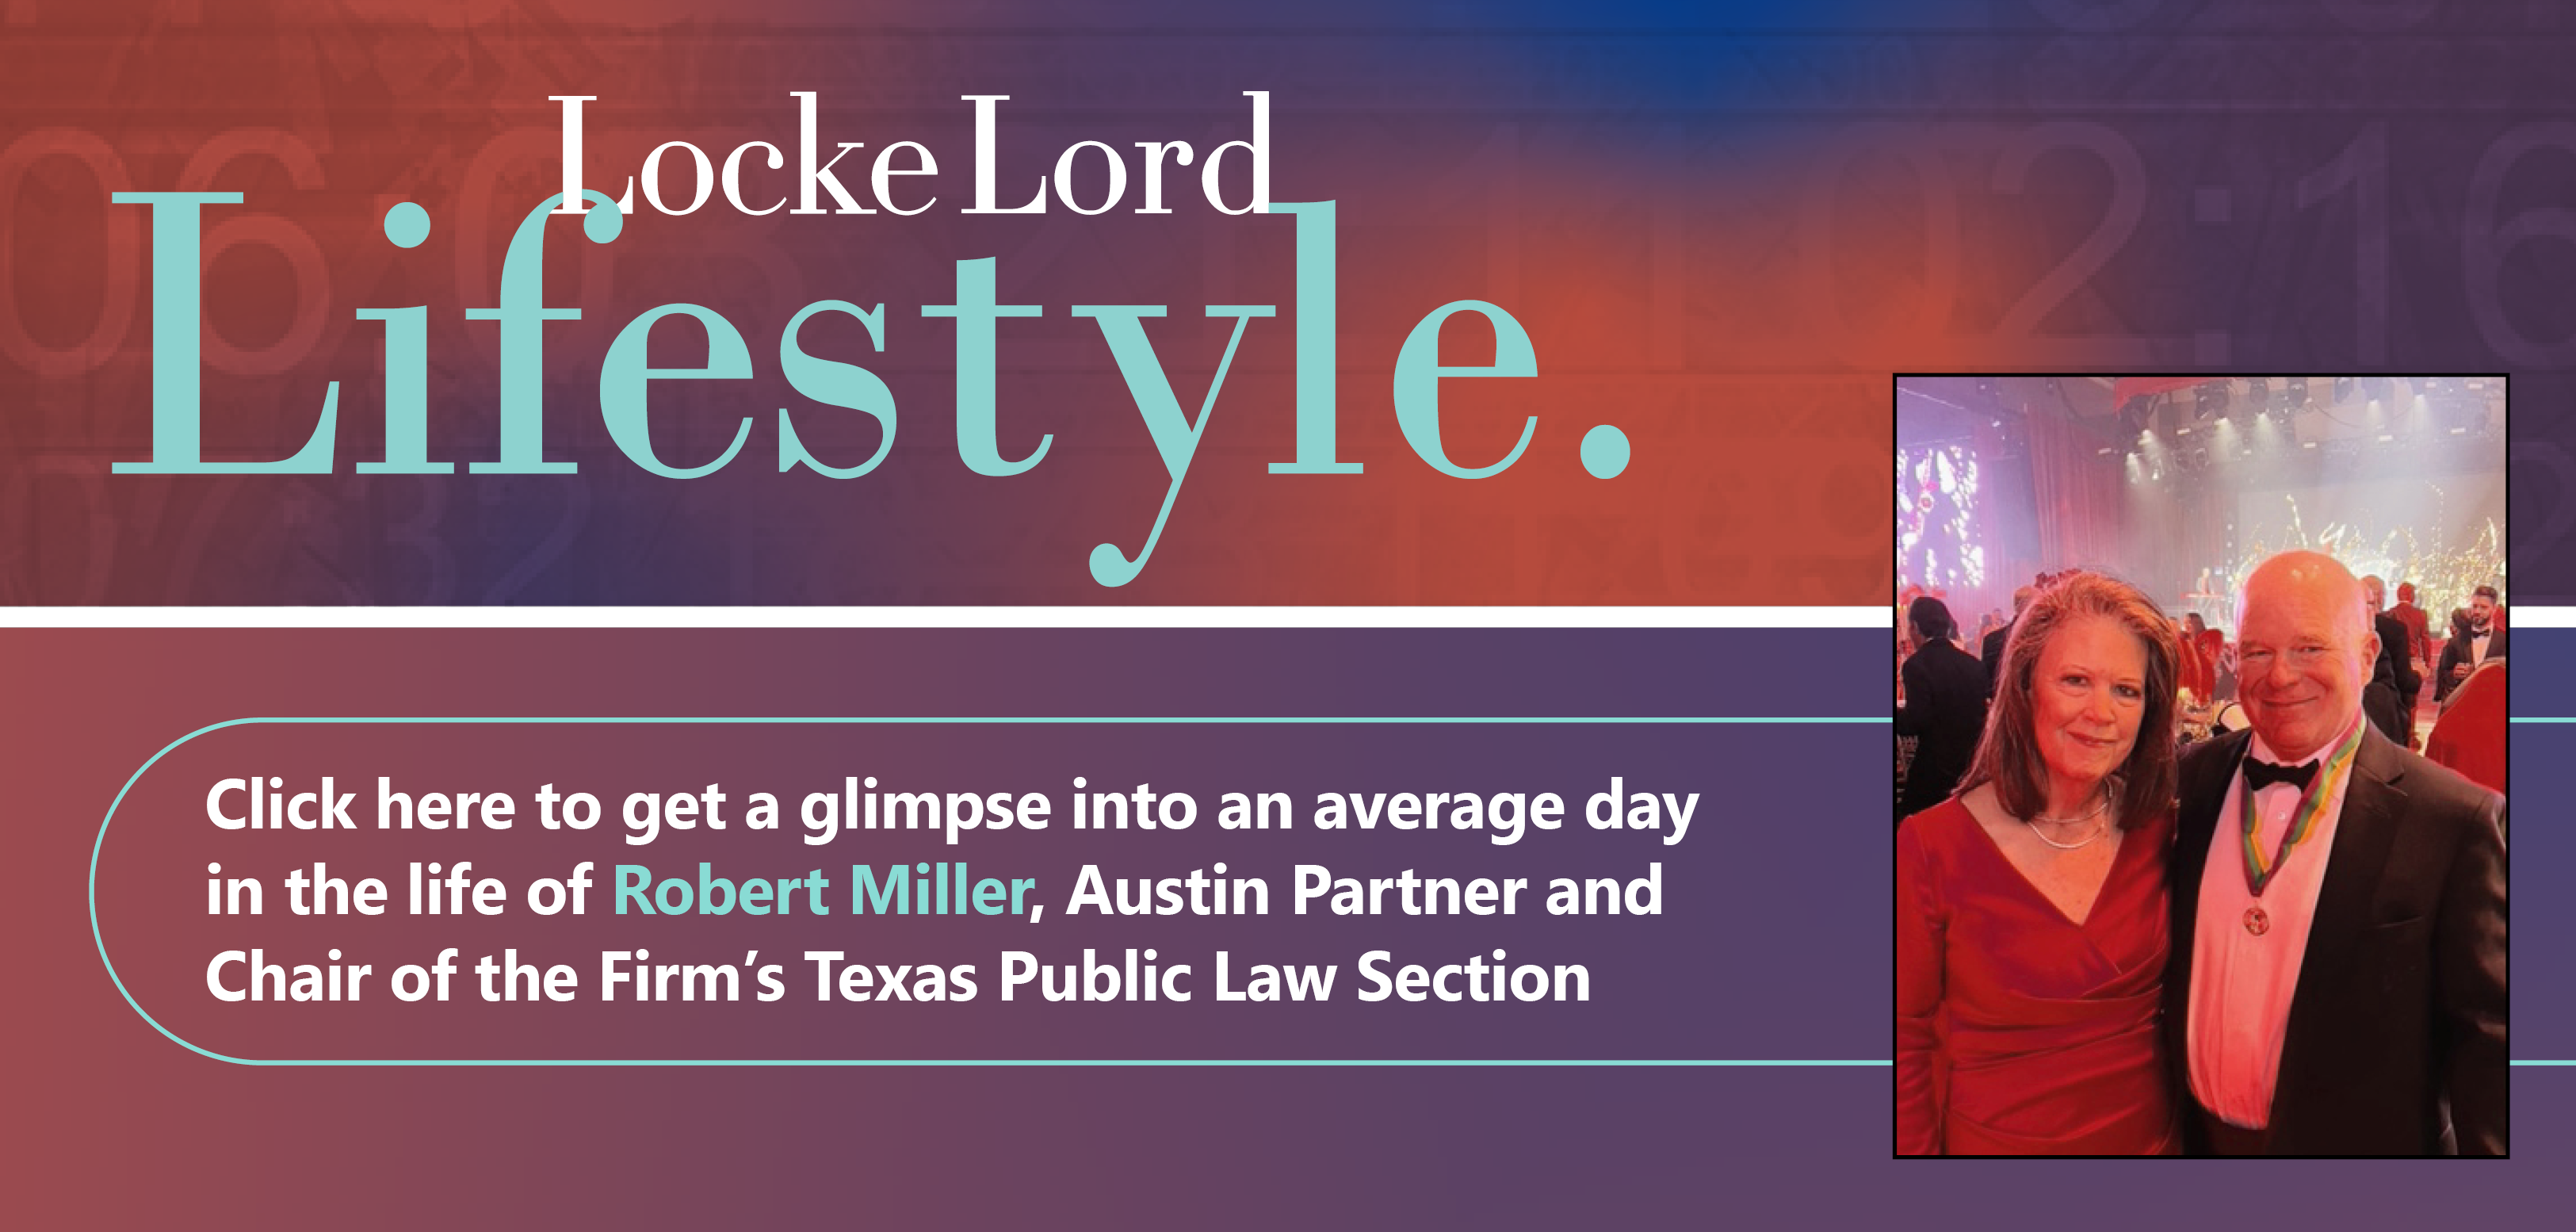 Locke Lord Lifestyle - Robert Miller